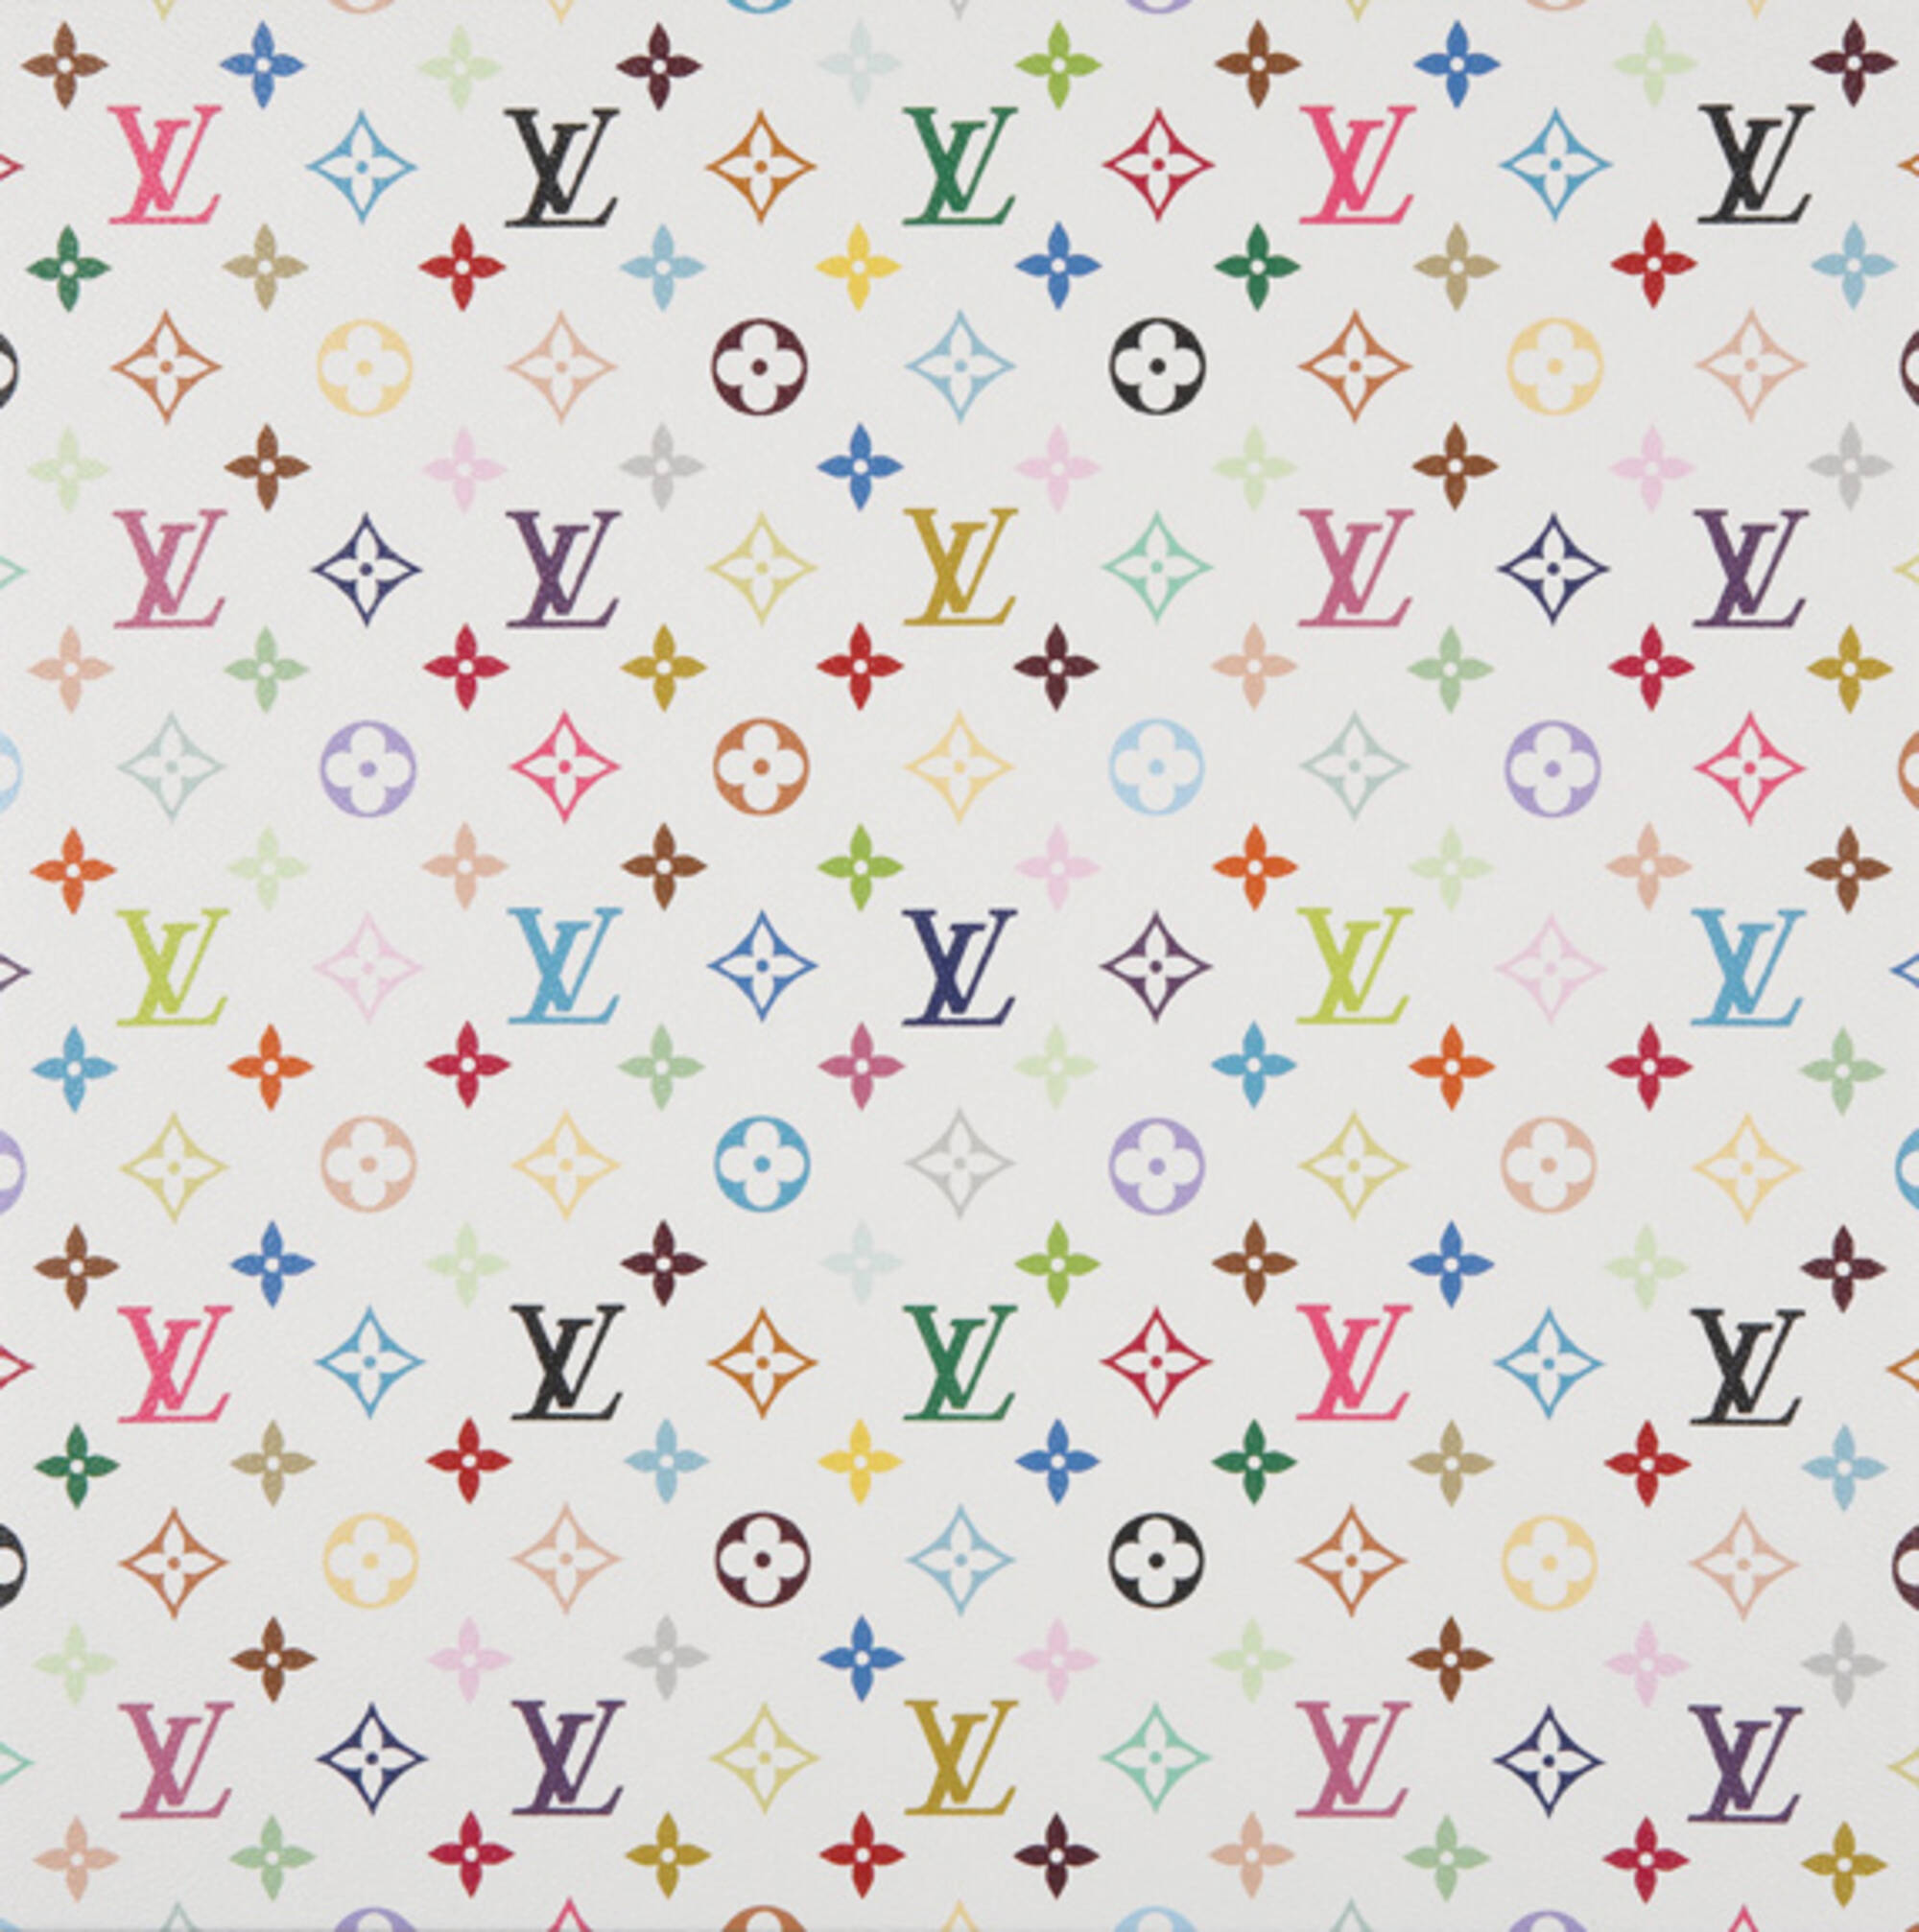 343: TAKASHI MURAKAMI, Monogram Multicolore - White < Modern Art & Design,  29 June 2008 < Auctions